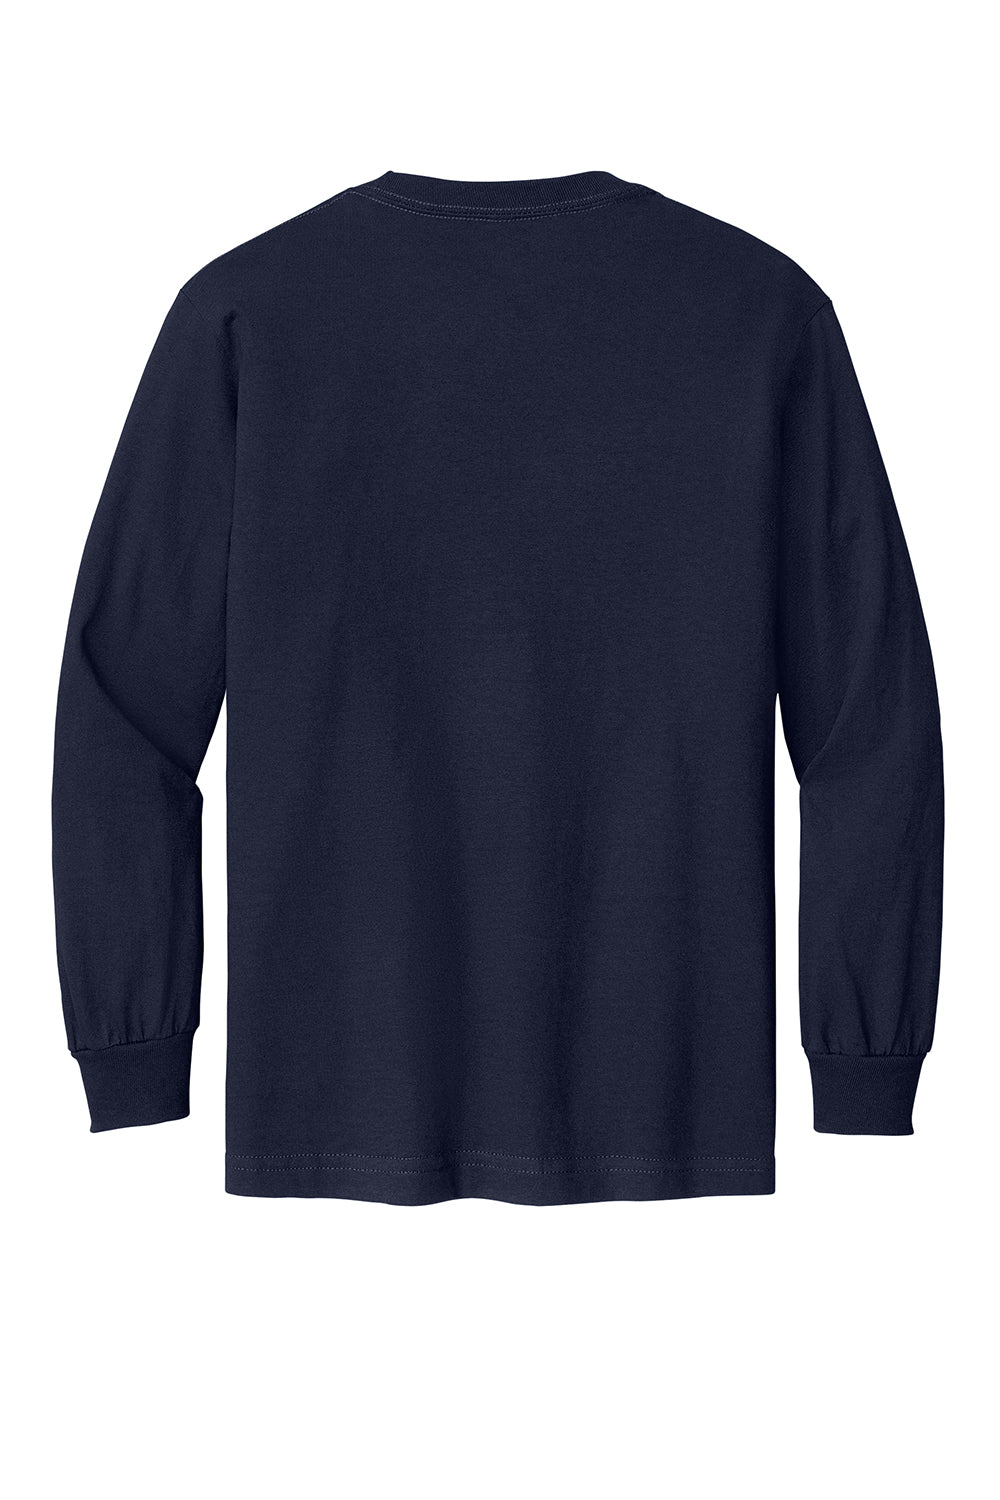 American Apparel AL1304/1304 Mens Long Sleeve Crewneck T-Shirt Navy Blue Model Flat Back